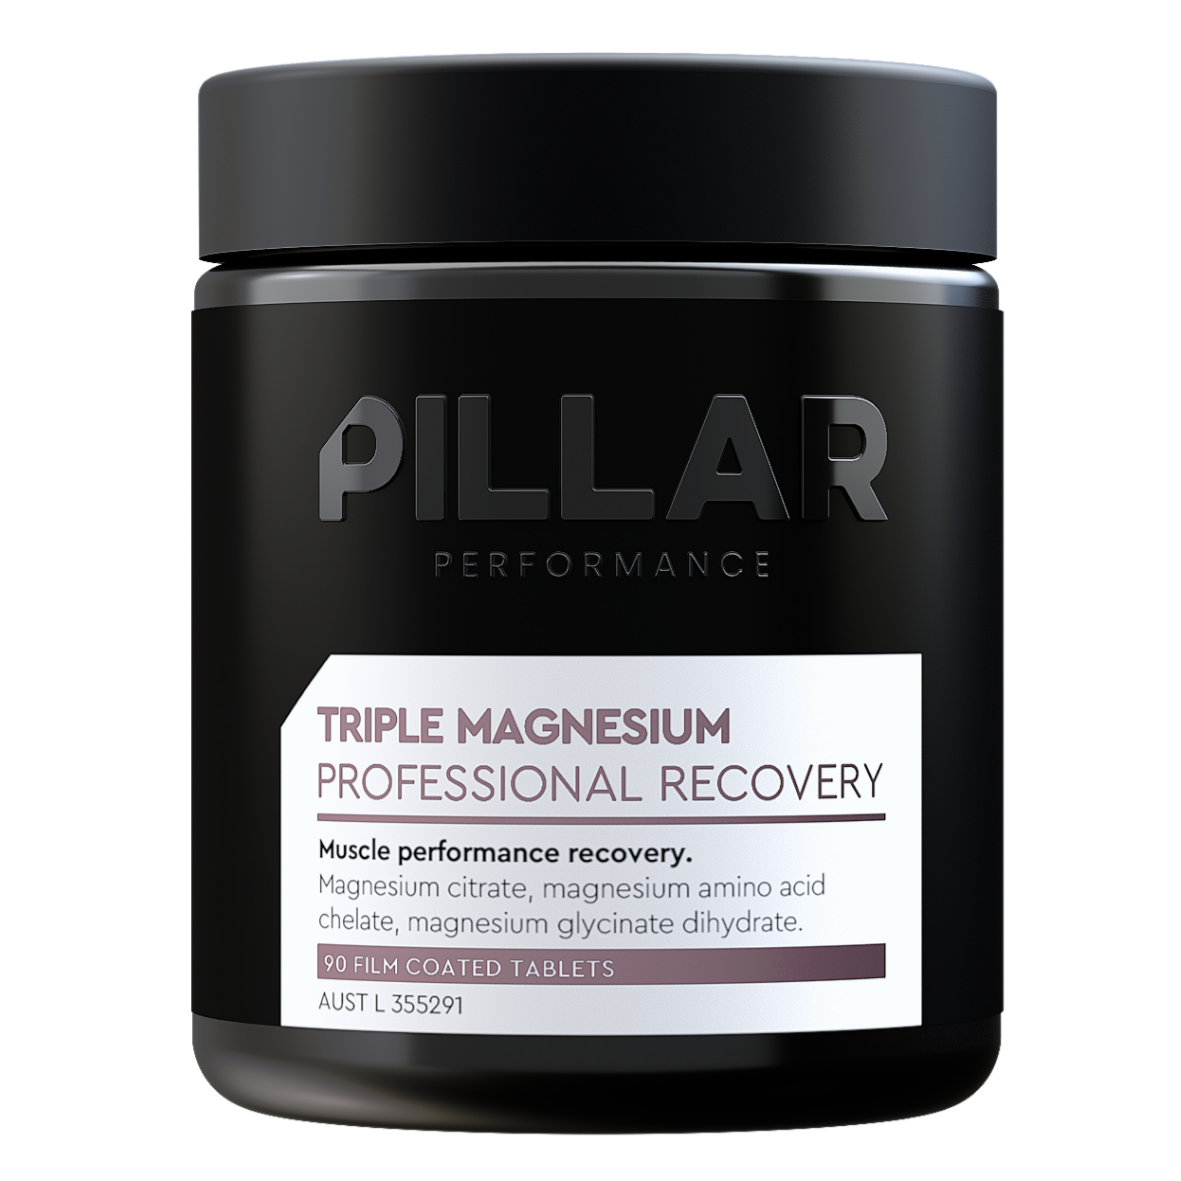 Pillar Peformance Triple Magnesium Professional Recovery powder